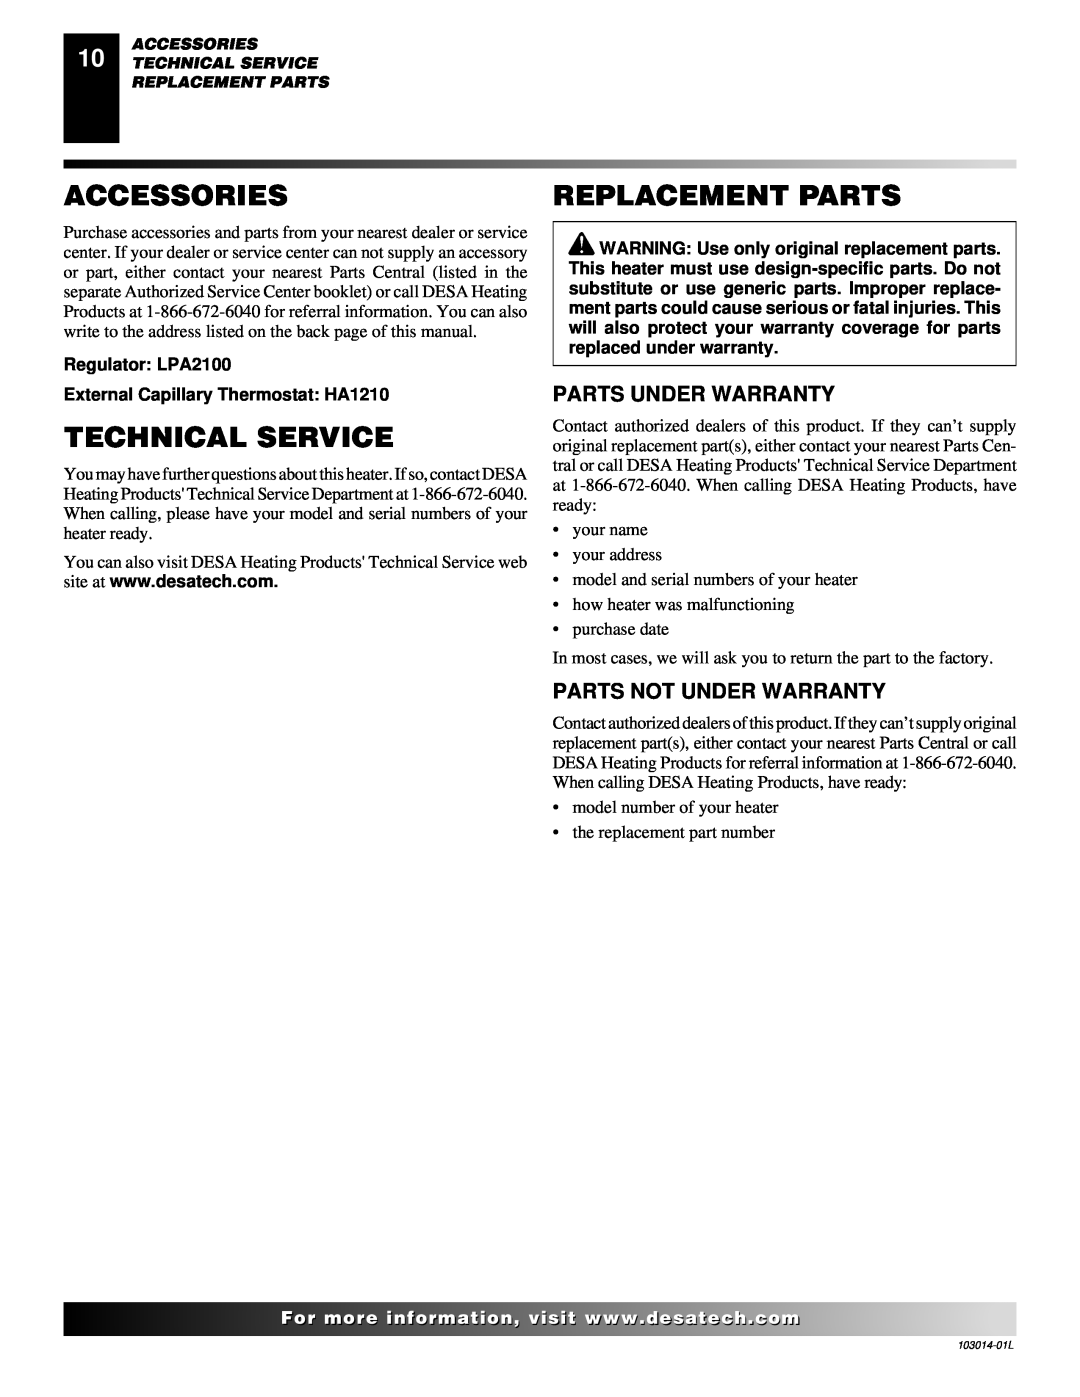 Desa SBLP155AT Accessories, Replacement Parts, Technical Service, Regulator LPA2100, External Capillary Thermostat HA1210 